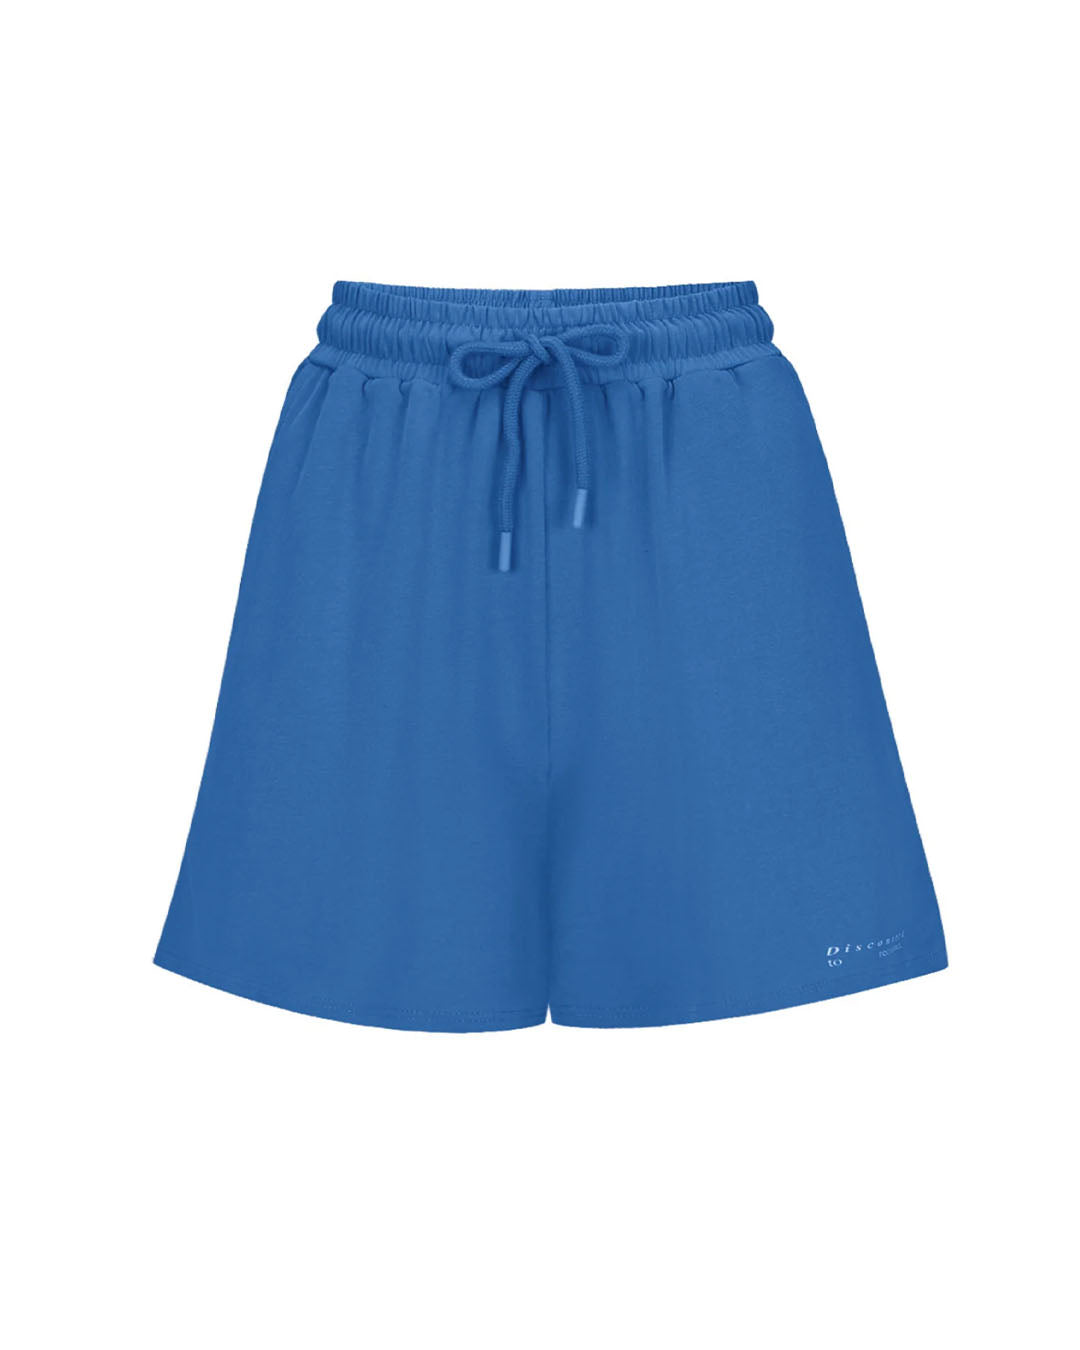 Cotton Sport Short - Ocean Activewear by Pinky &amp; Kamal - Prae Store